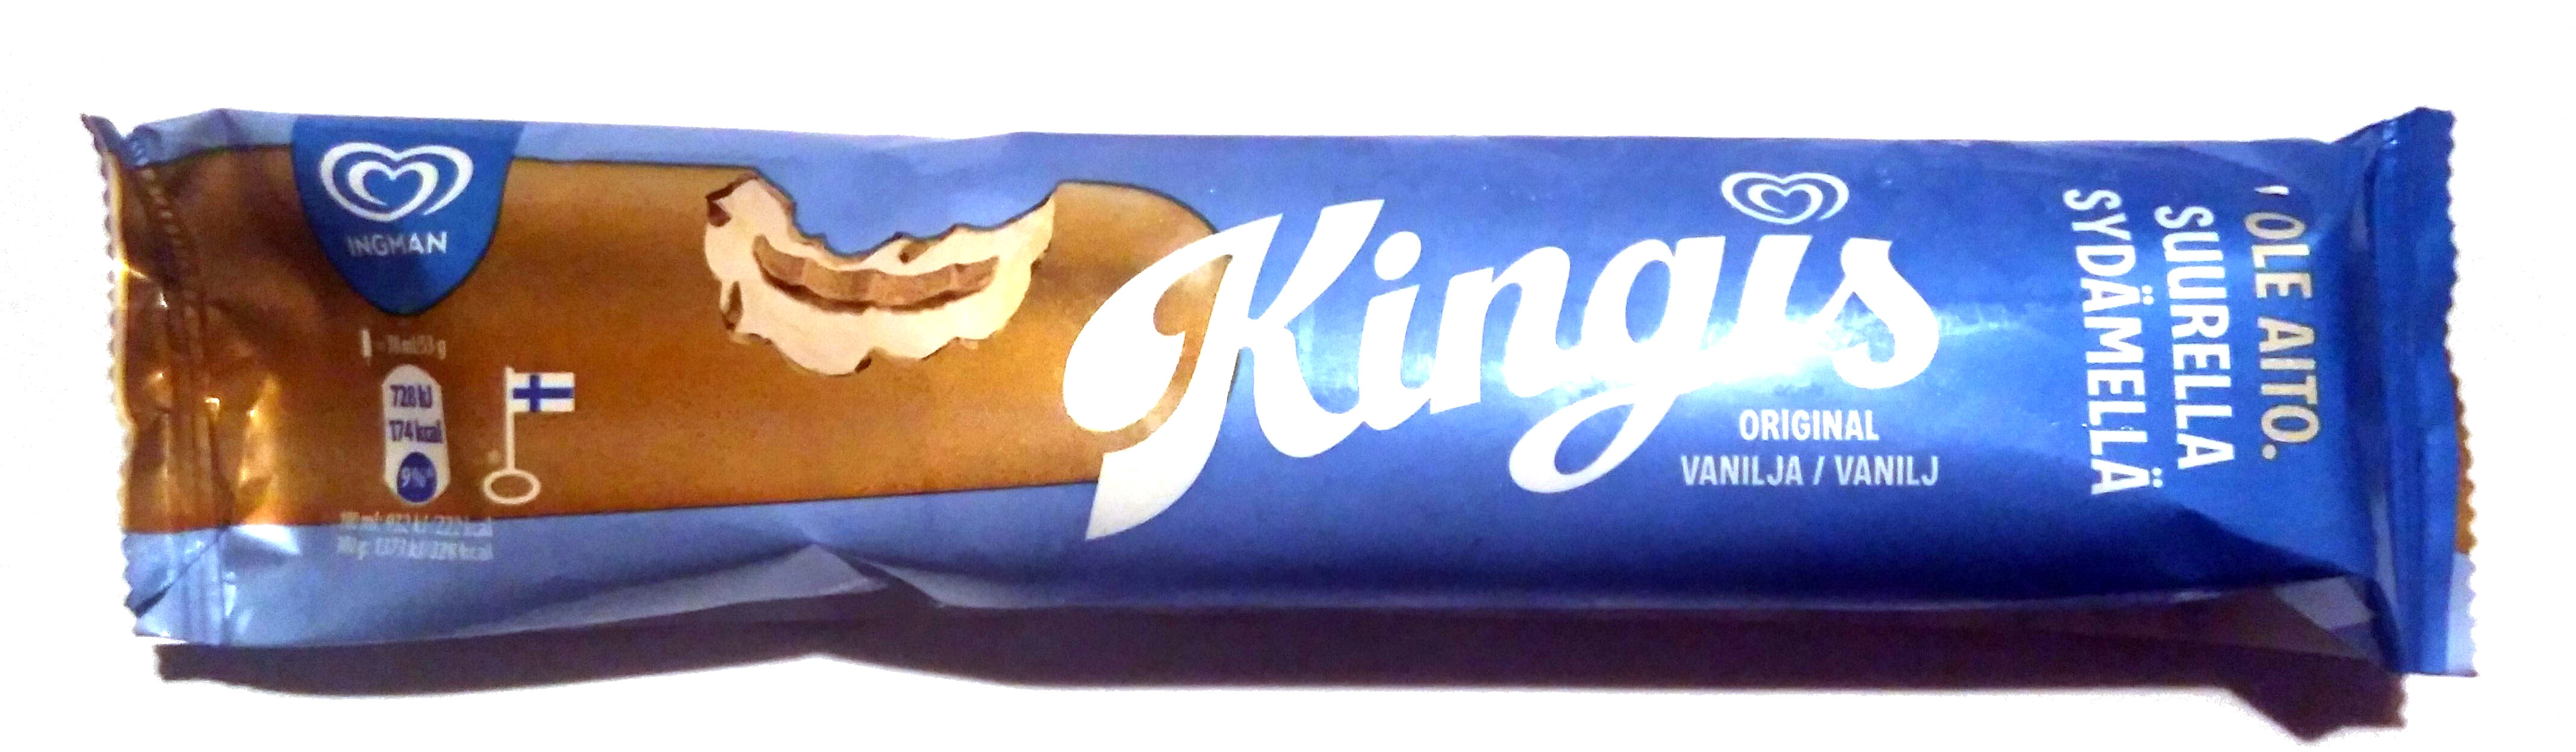 Kingis Original Vanilja - Produkt - sv